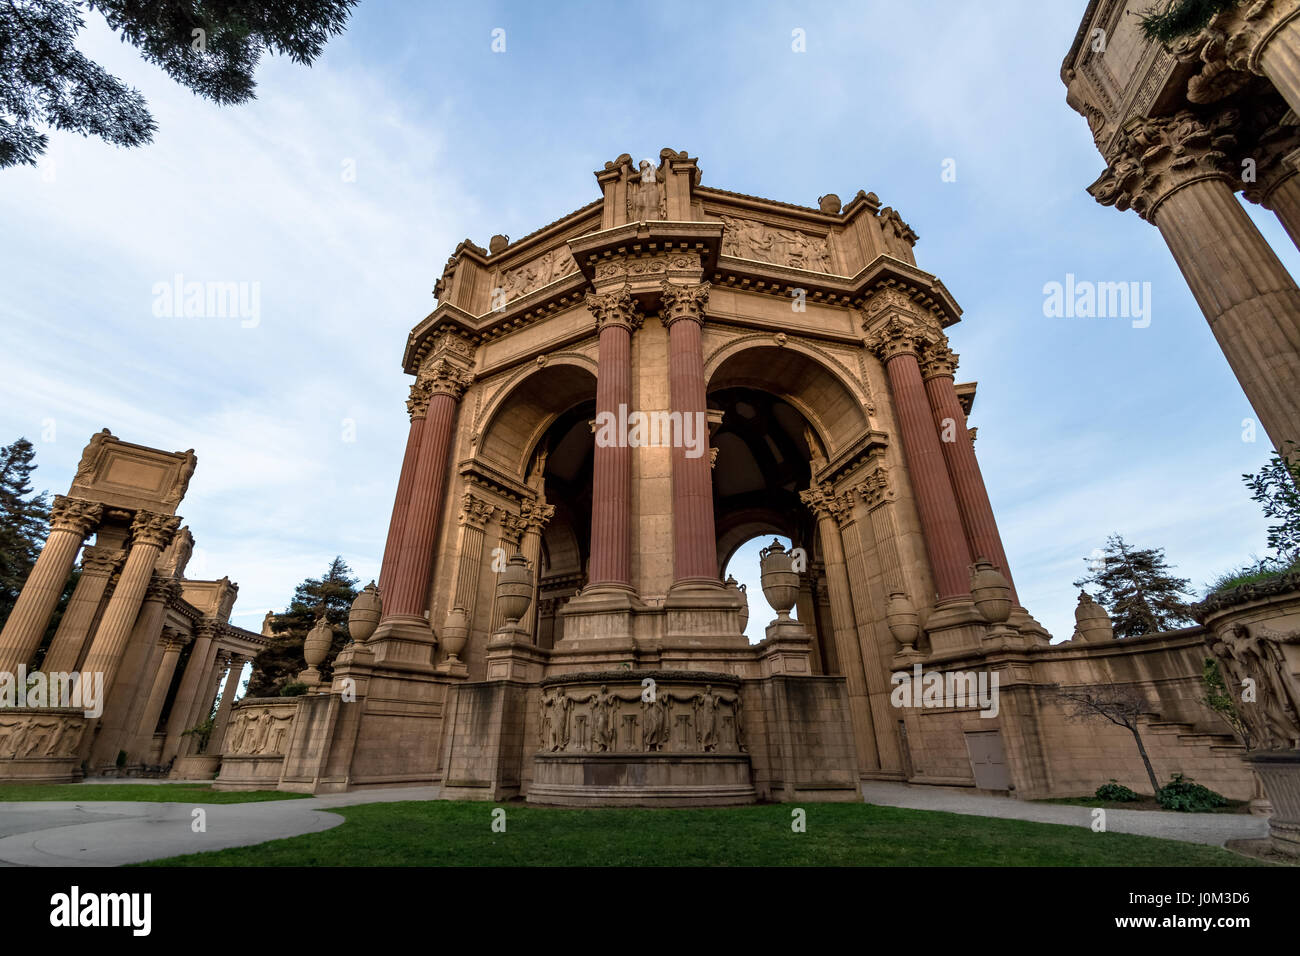 The Palace of Fine Arts - San Francisco, California, USA Stock Photo